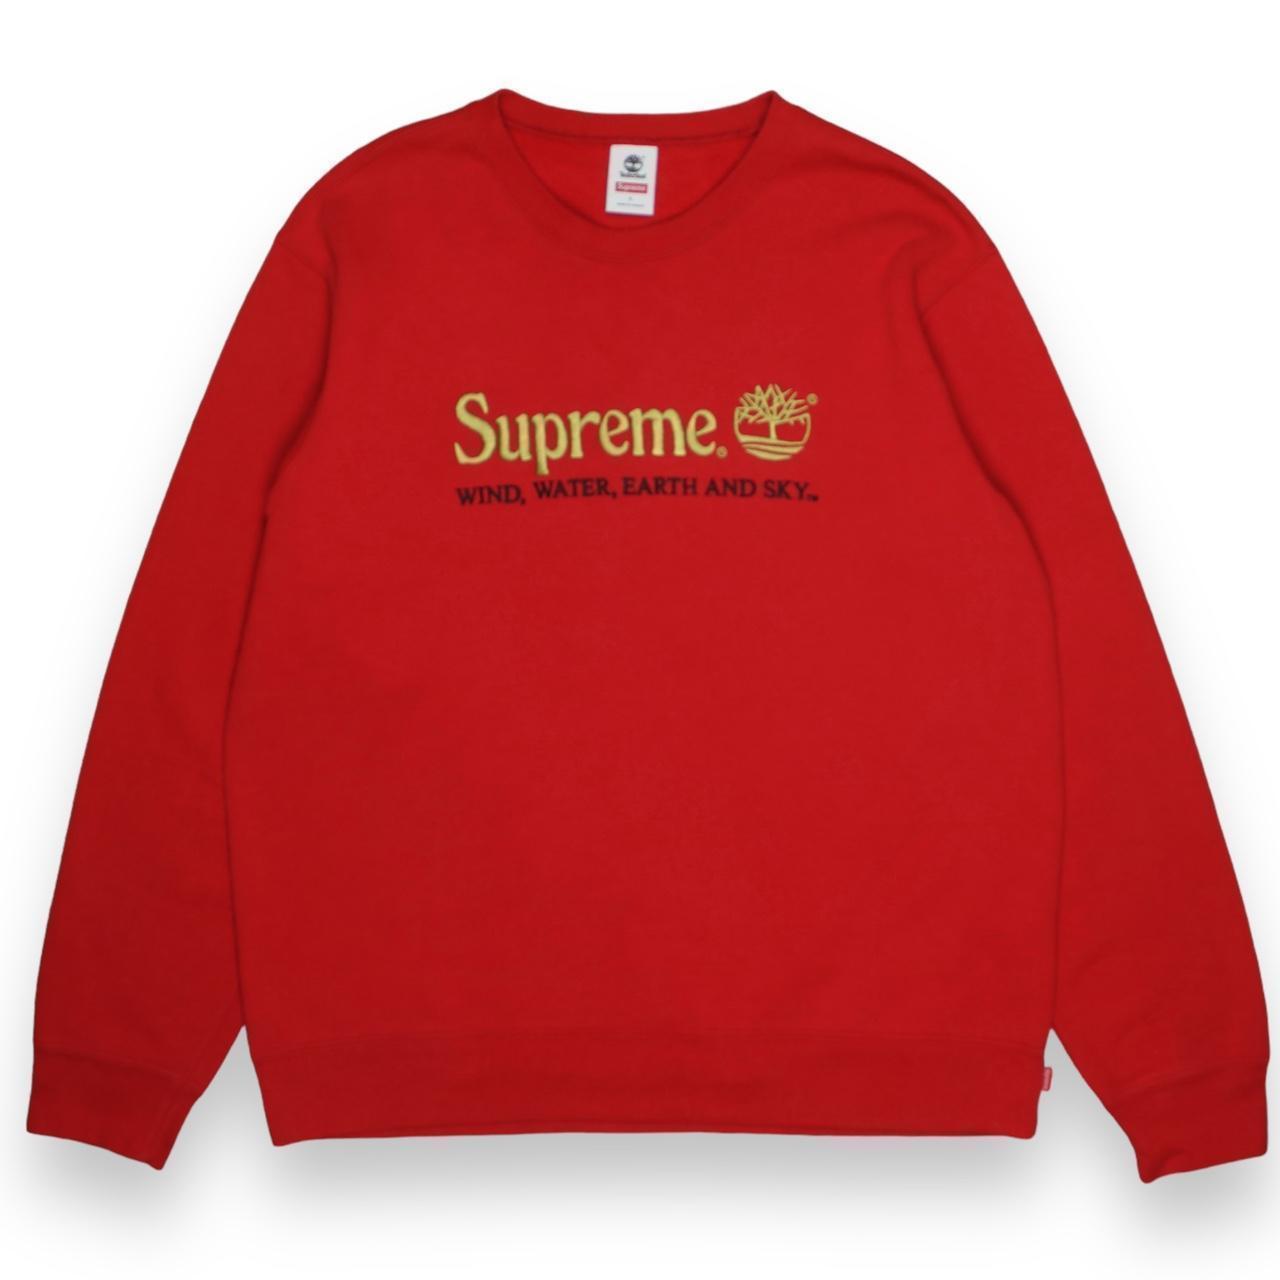 Supreme x Timberland Sweatshirt...